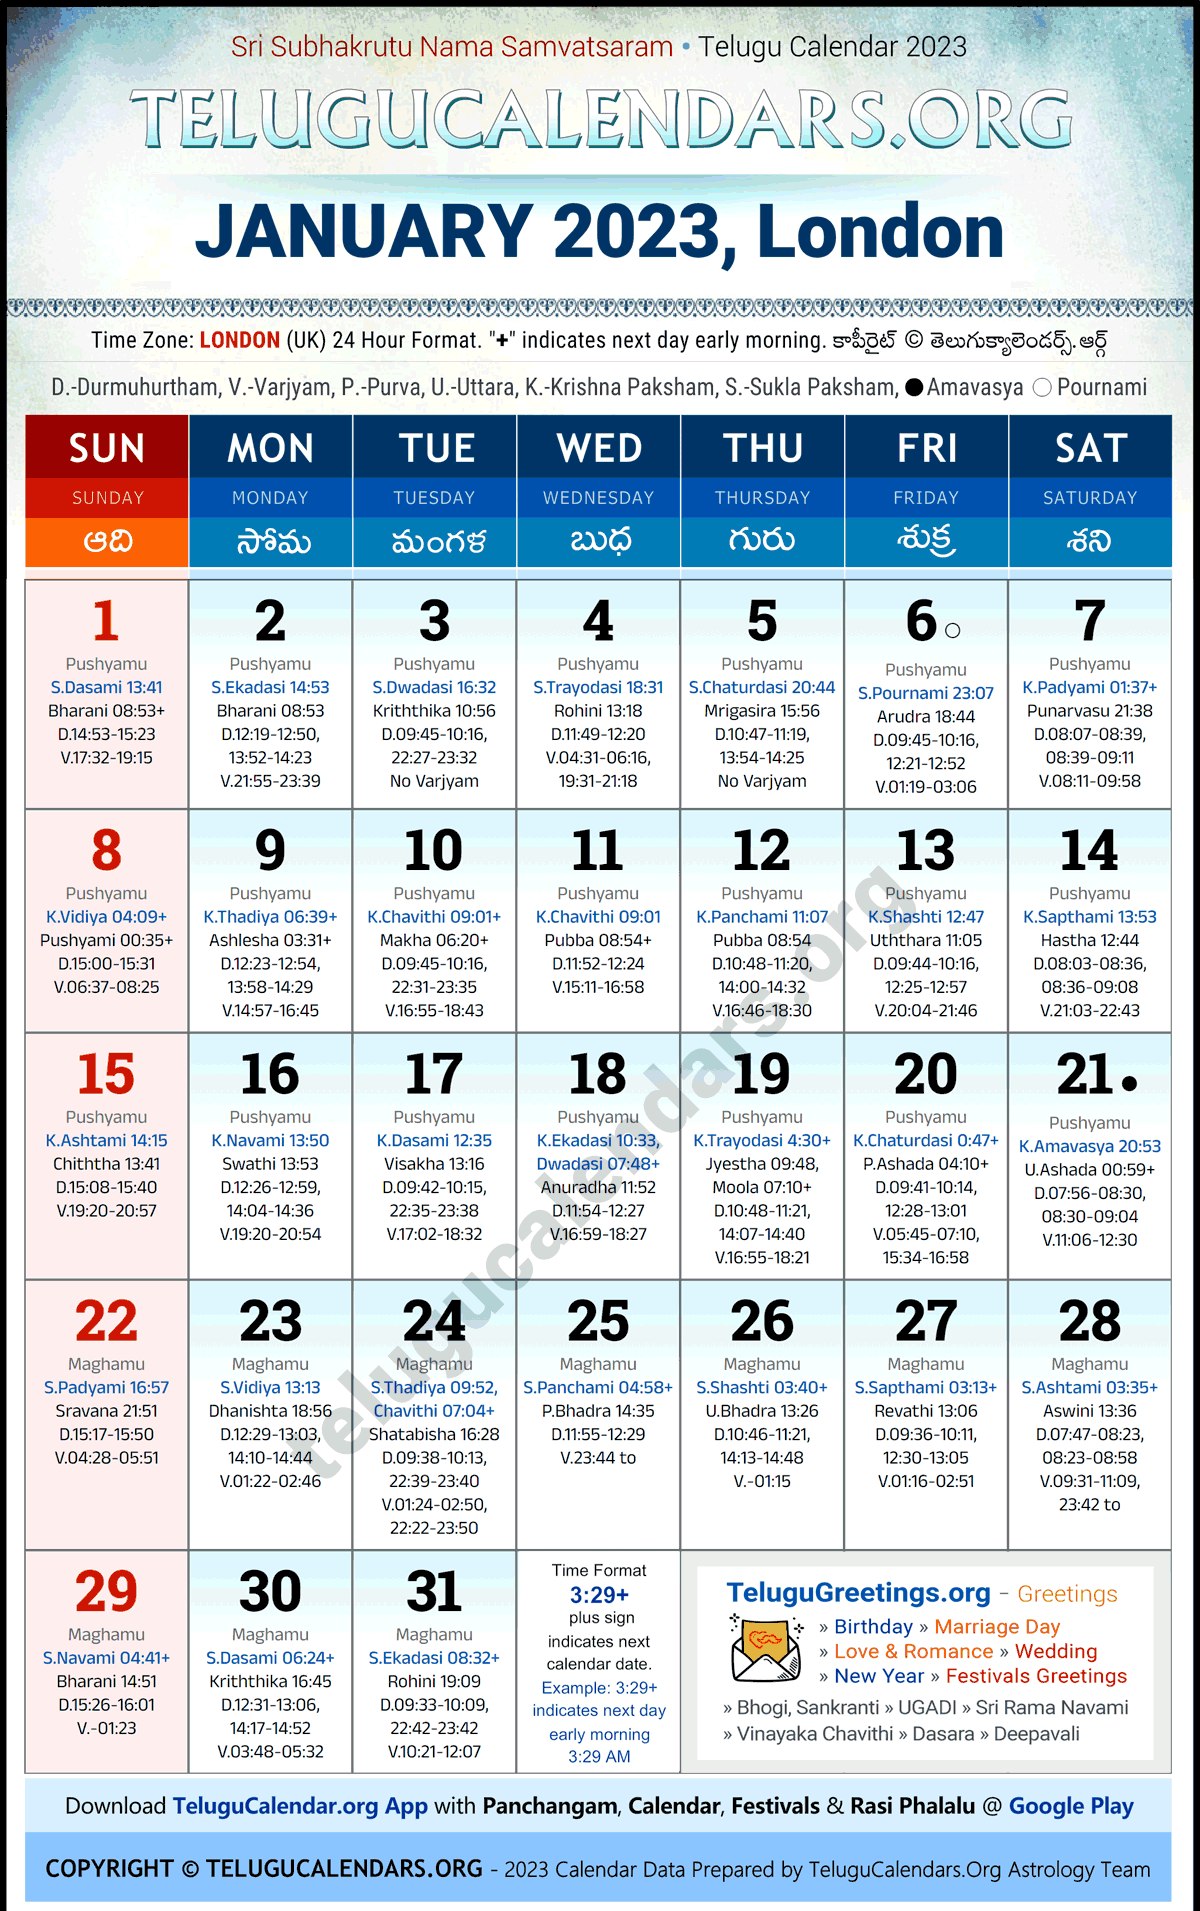 Telugu Calendar 2023 January Festivals for London